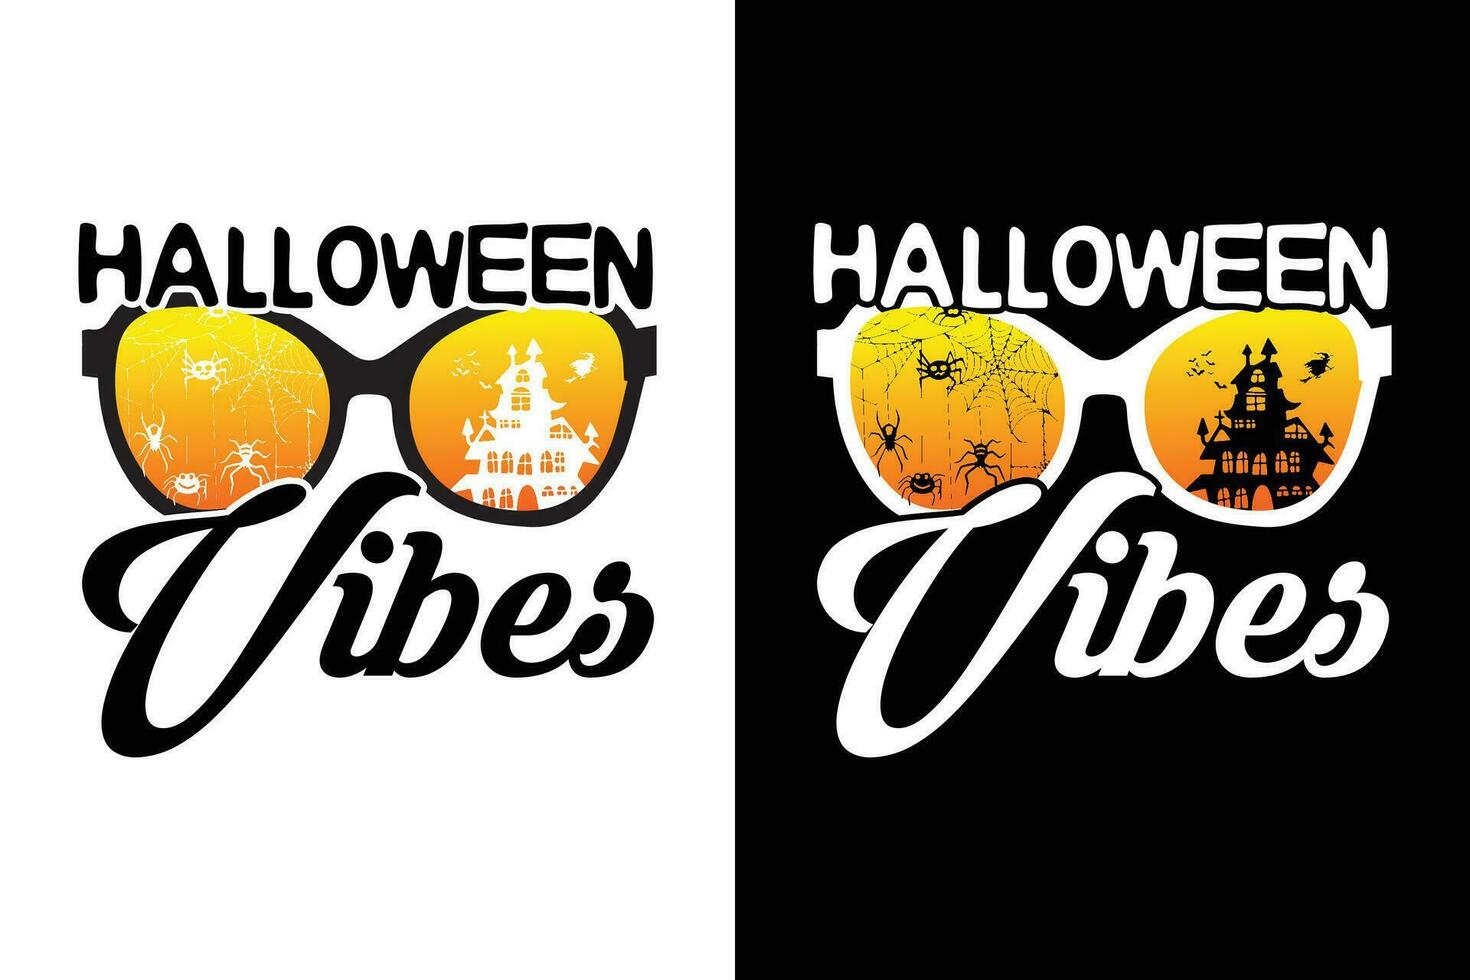 Halloween Vibes typography t-shirt design template. Halloween design vector illustration.